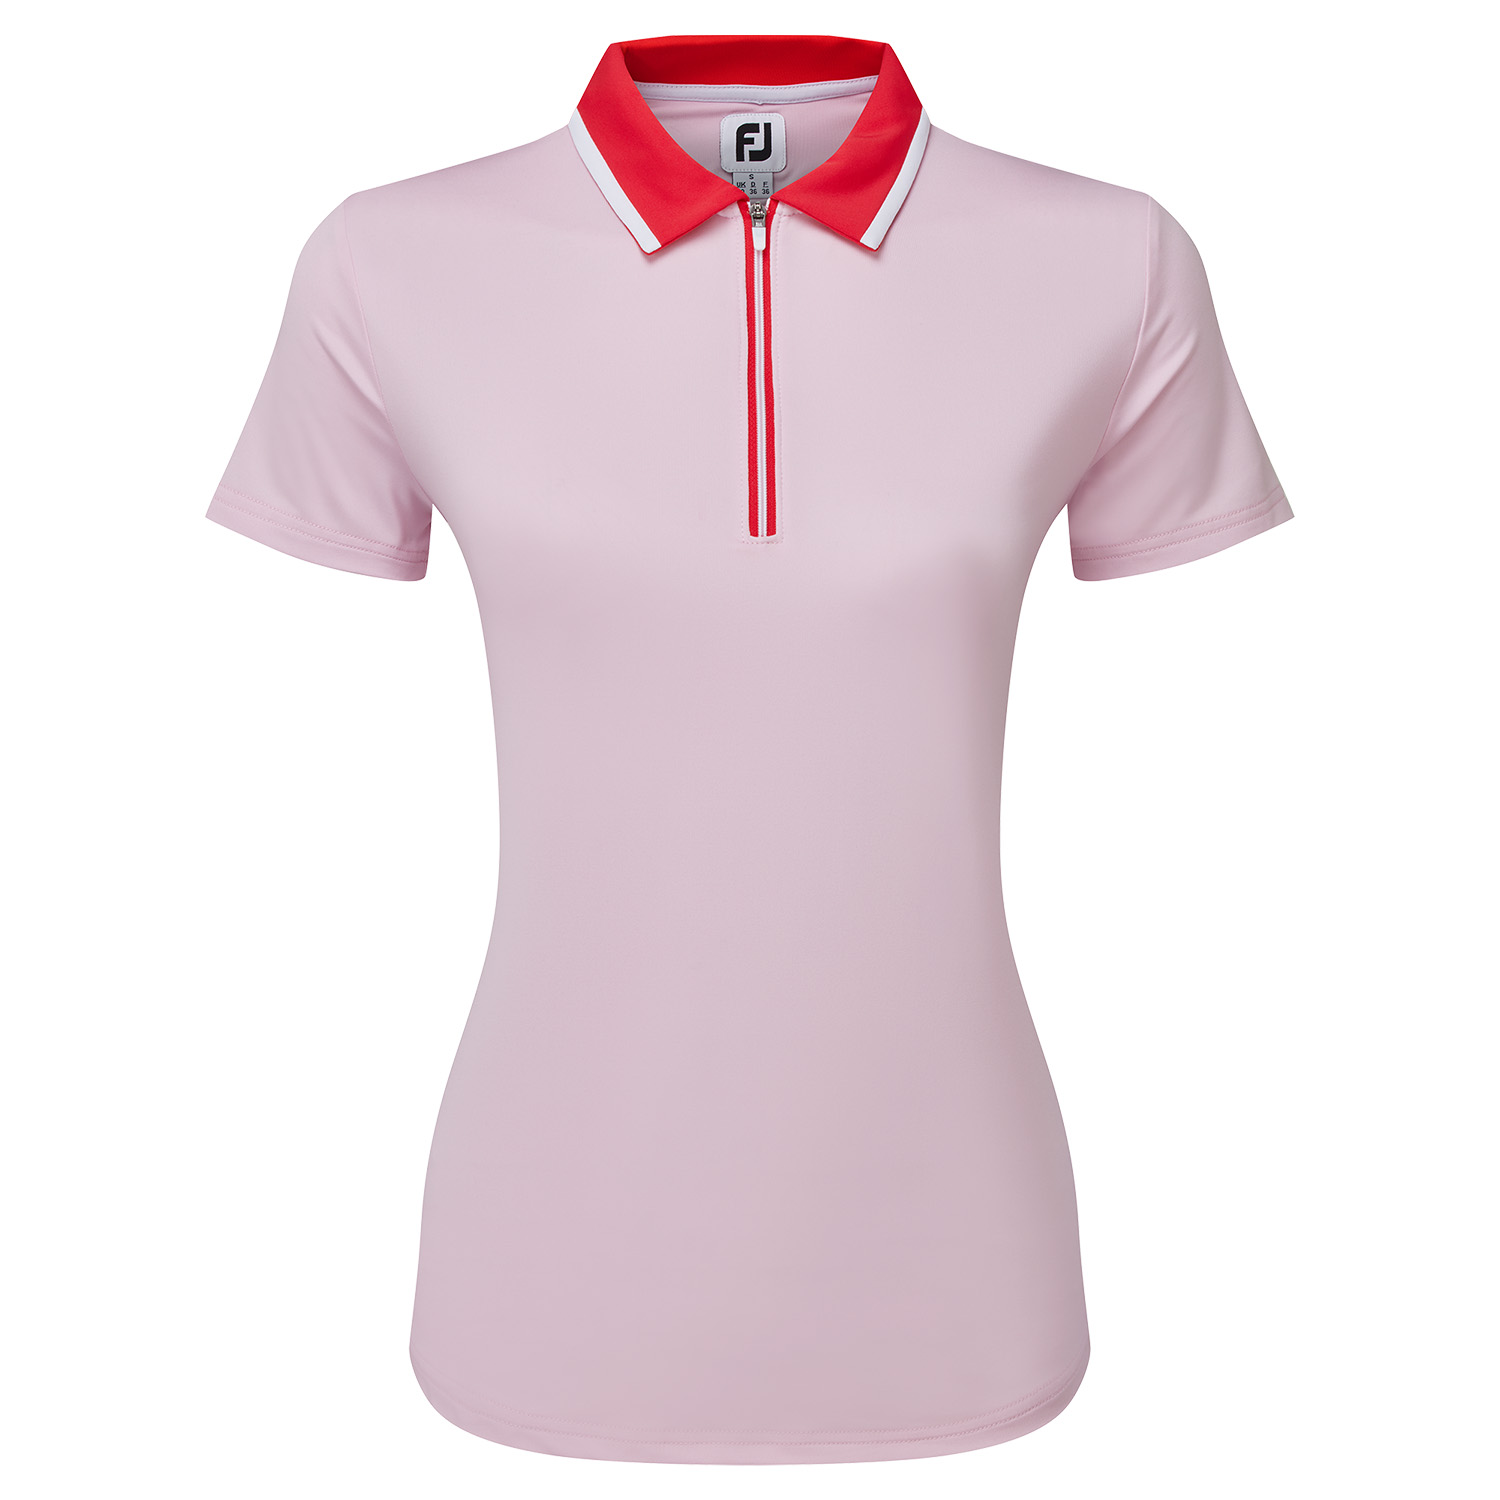 FootJoy Colour Block Cap Sleeveless Ladies Golf Polo Shirt